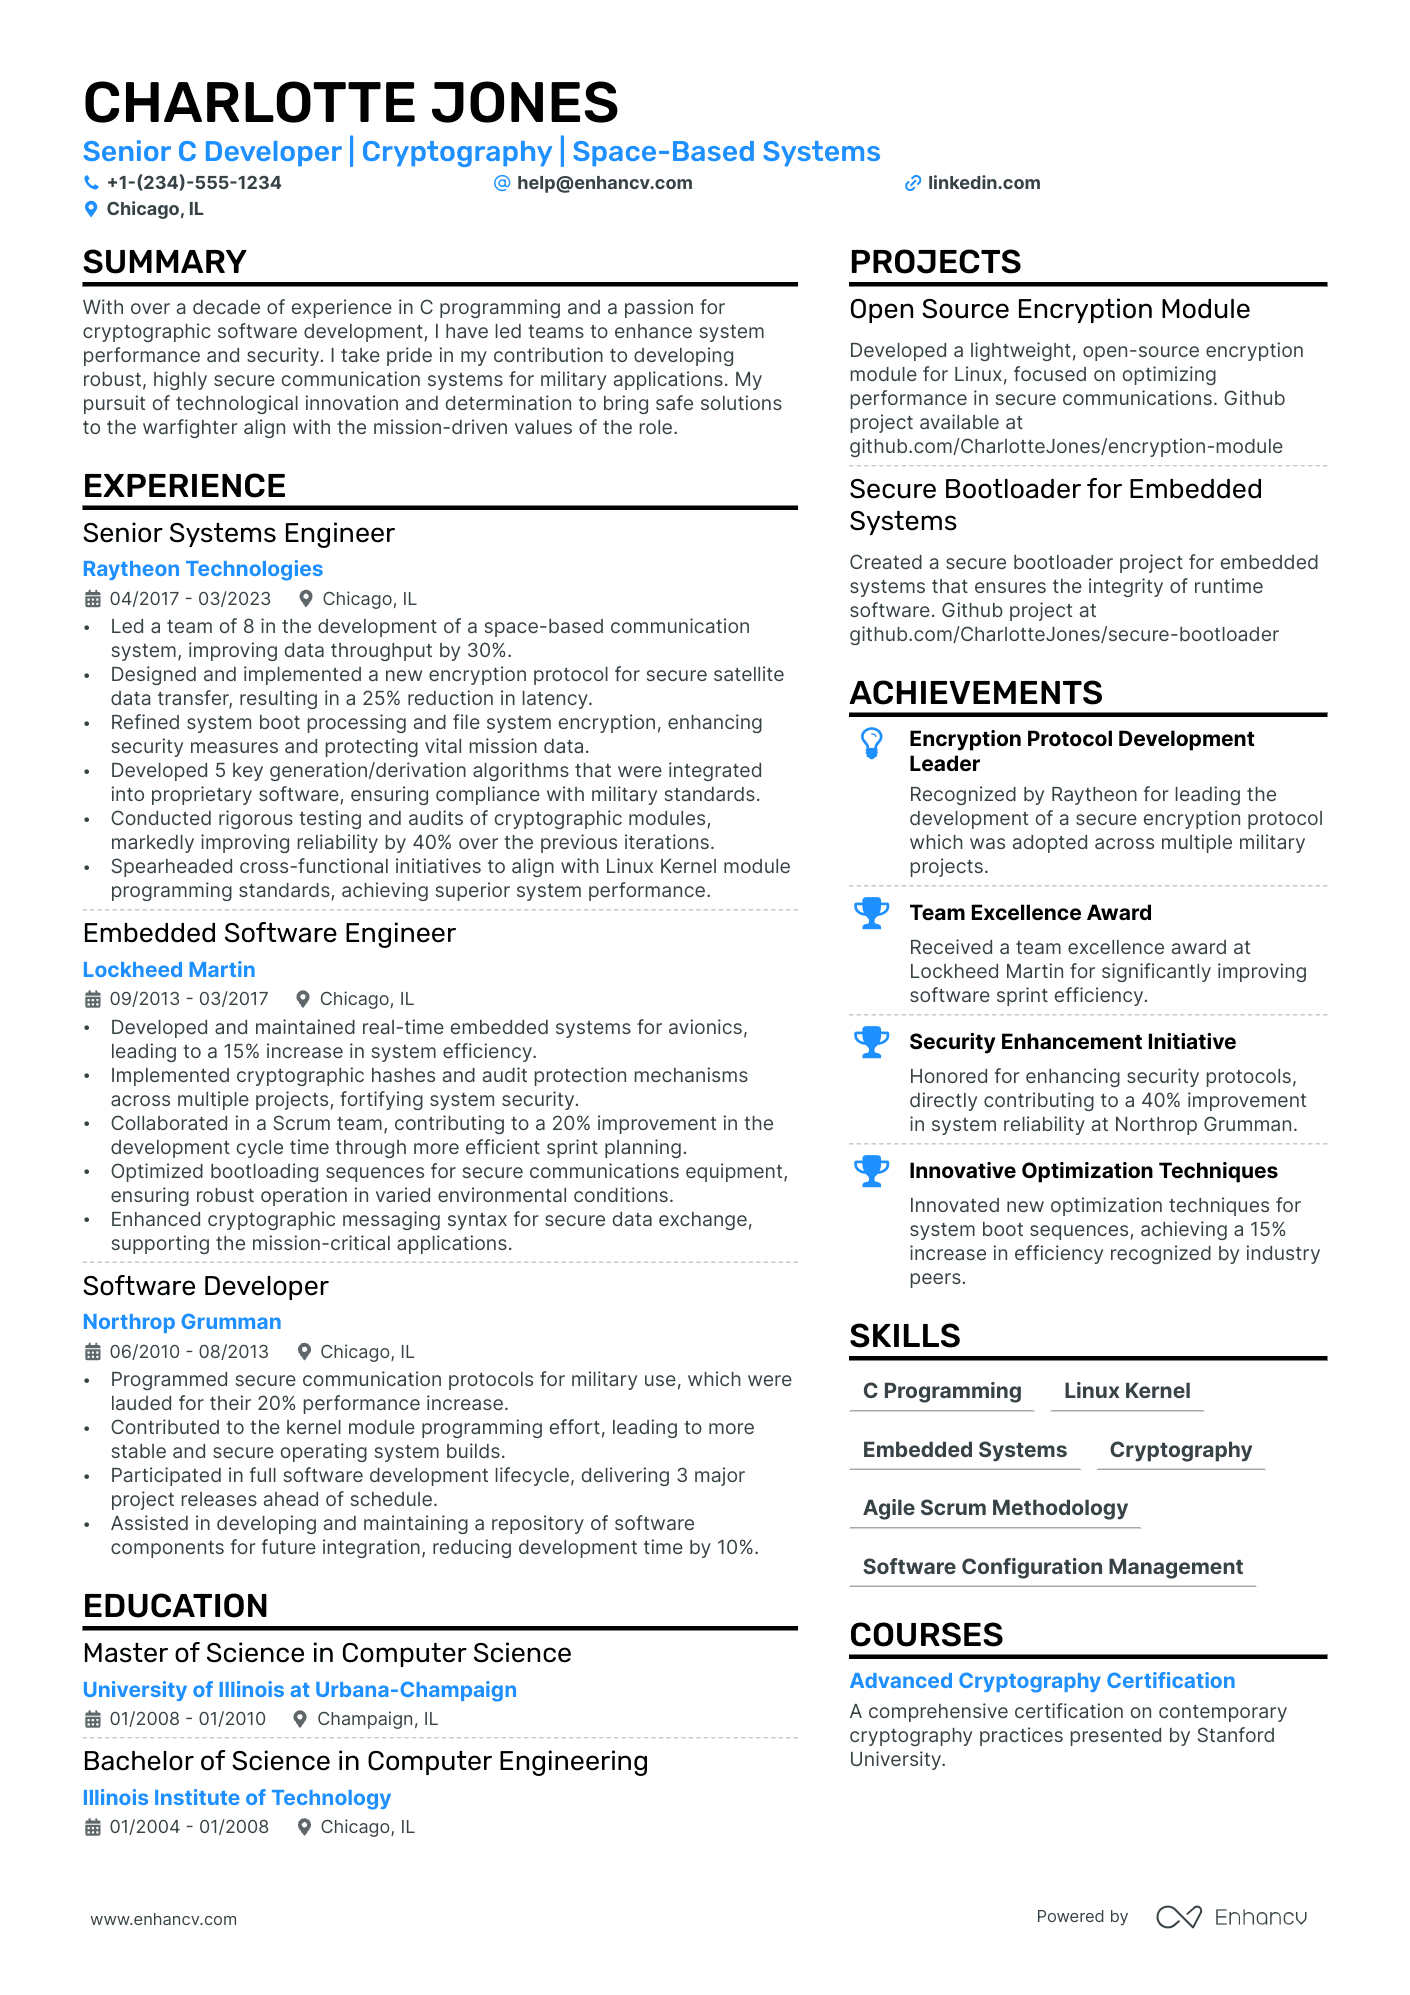 resume format for experienced web developer